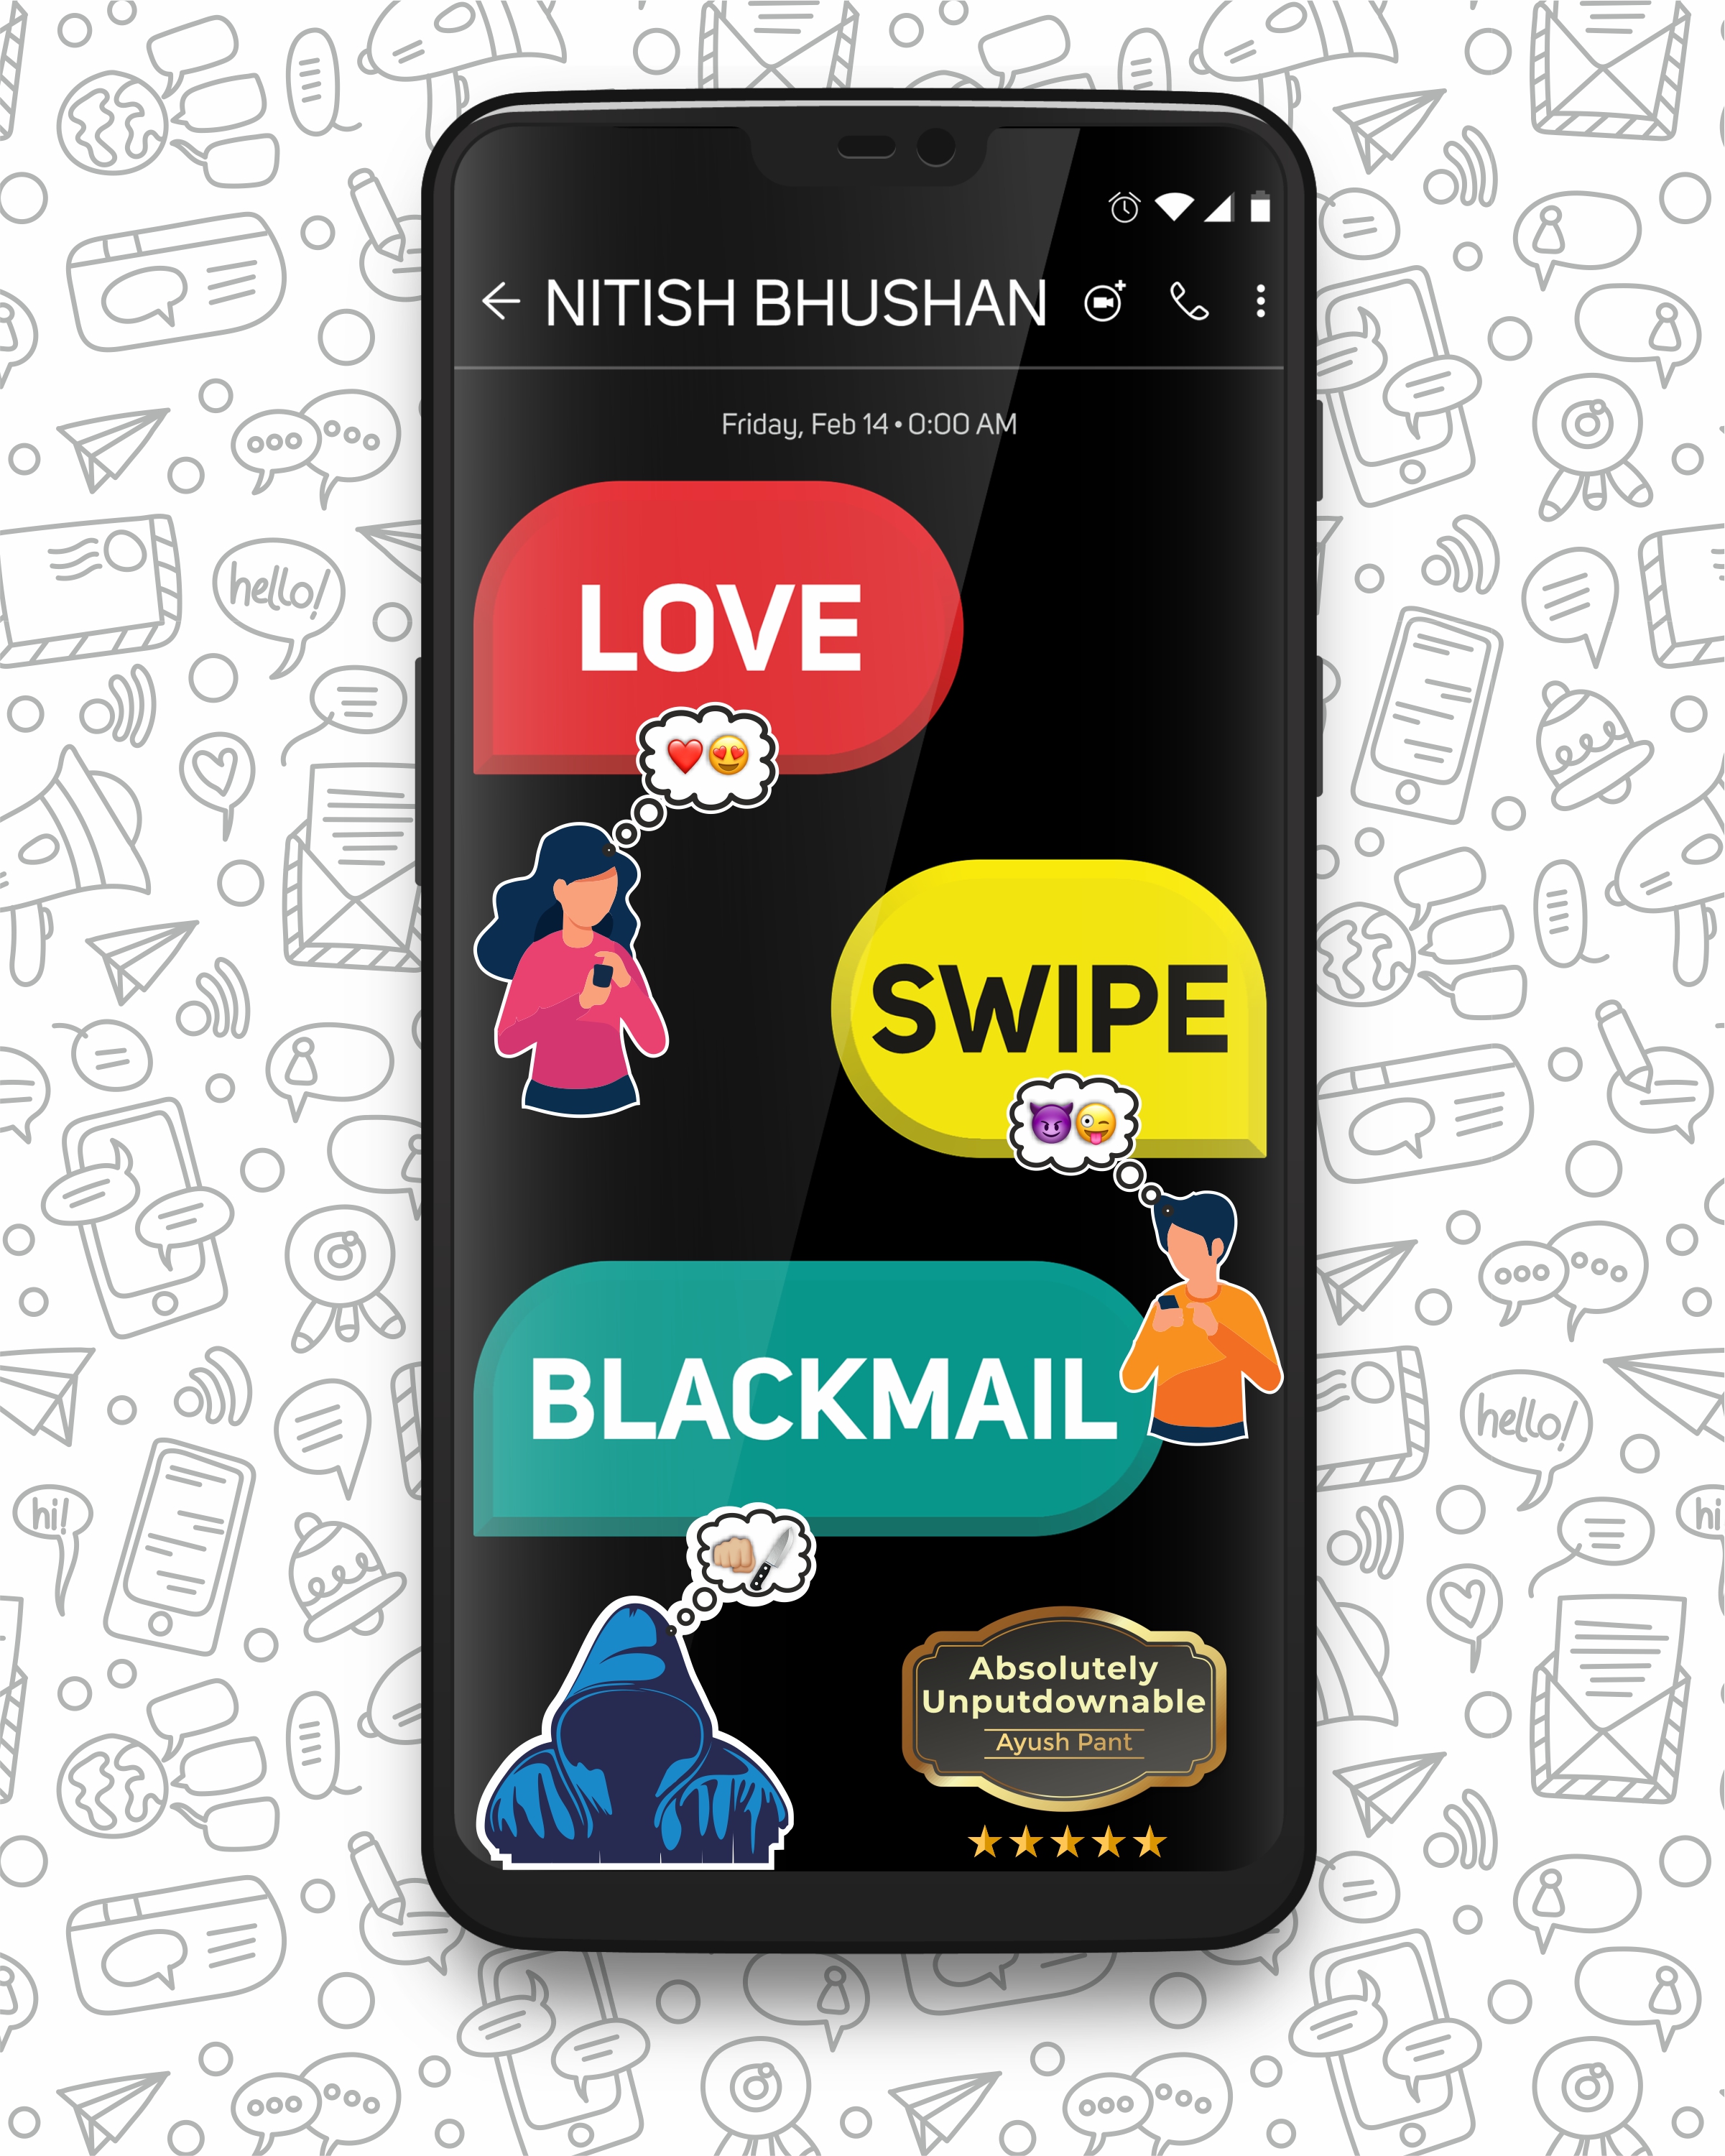  “Love Swipe Blackmail” by Nitish Bhushan- Published by Bluerose Publication